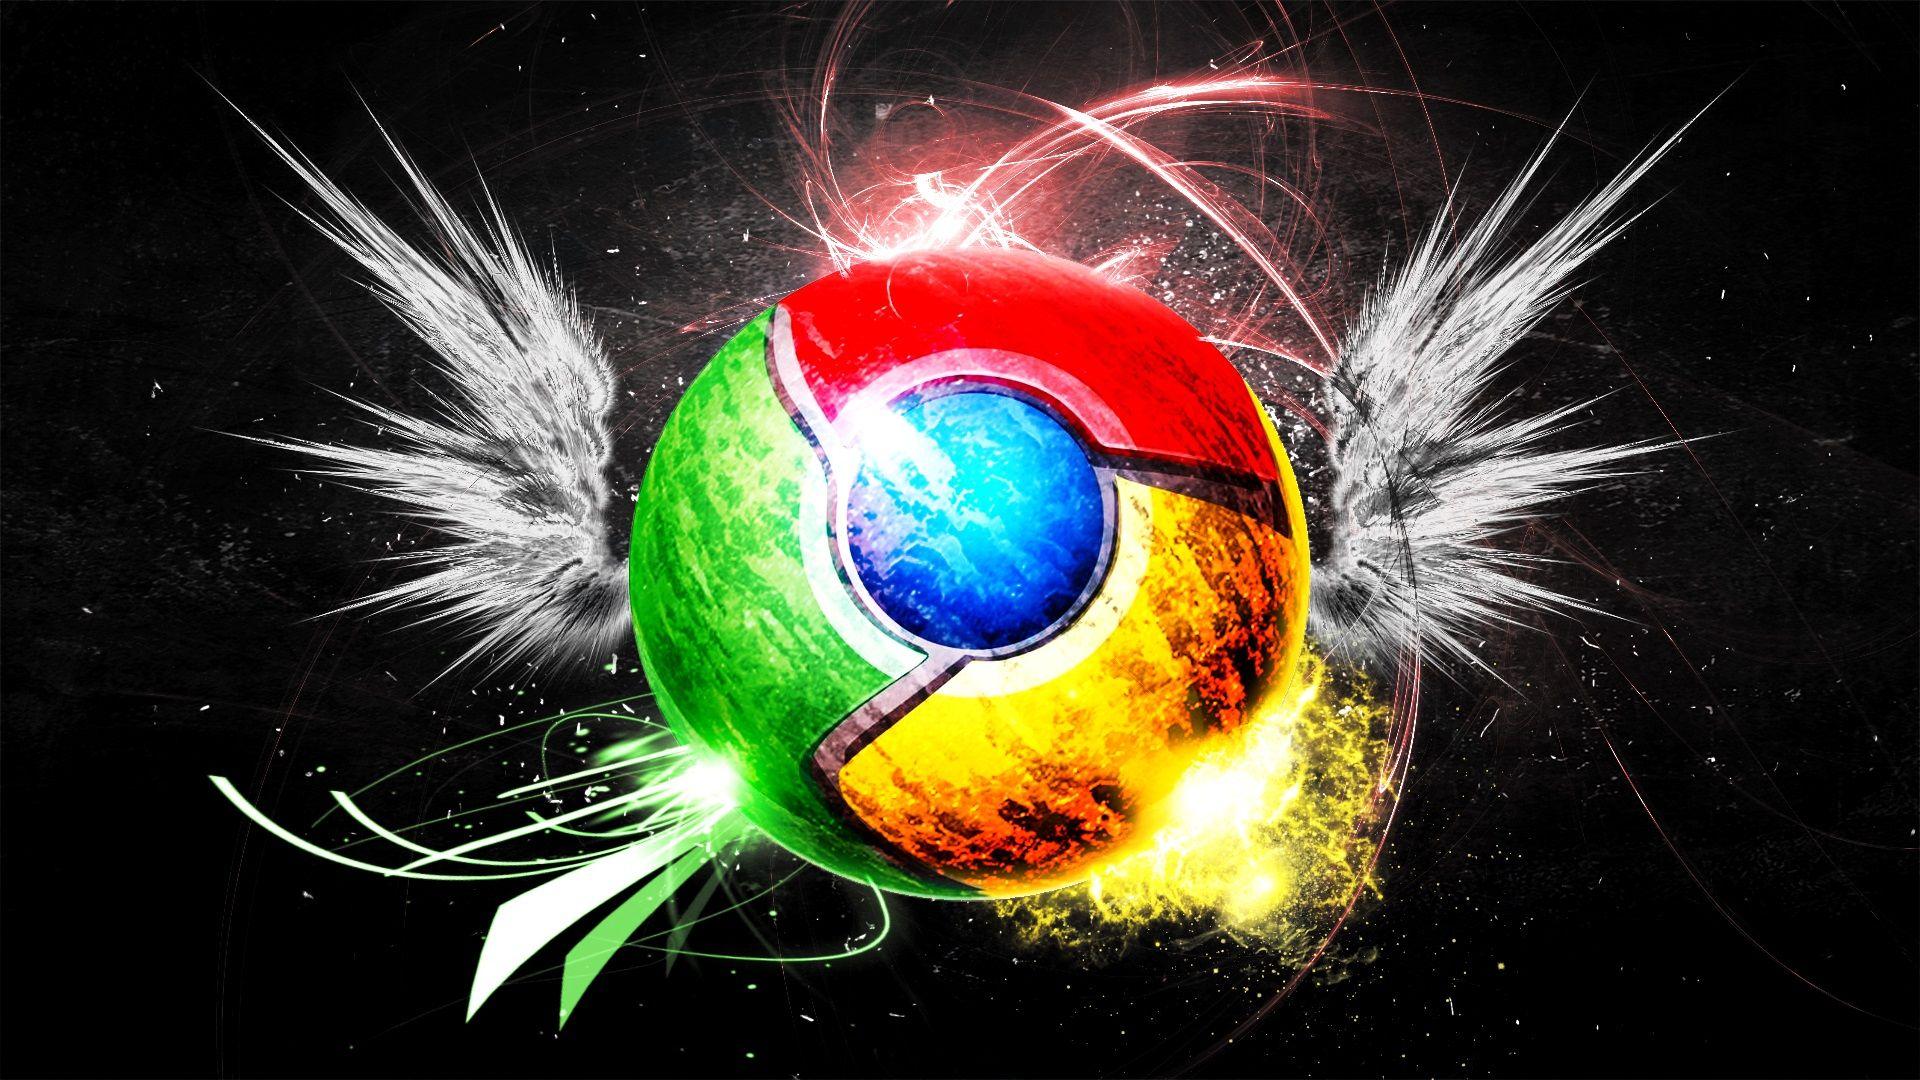 Original Google Chrome Logo - Wallpaper Google Chrome Logo, creative, wings, colorful 1920x1080 ...